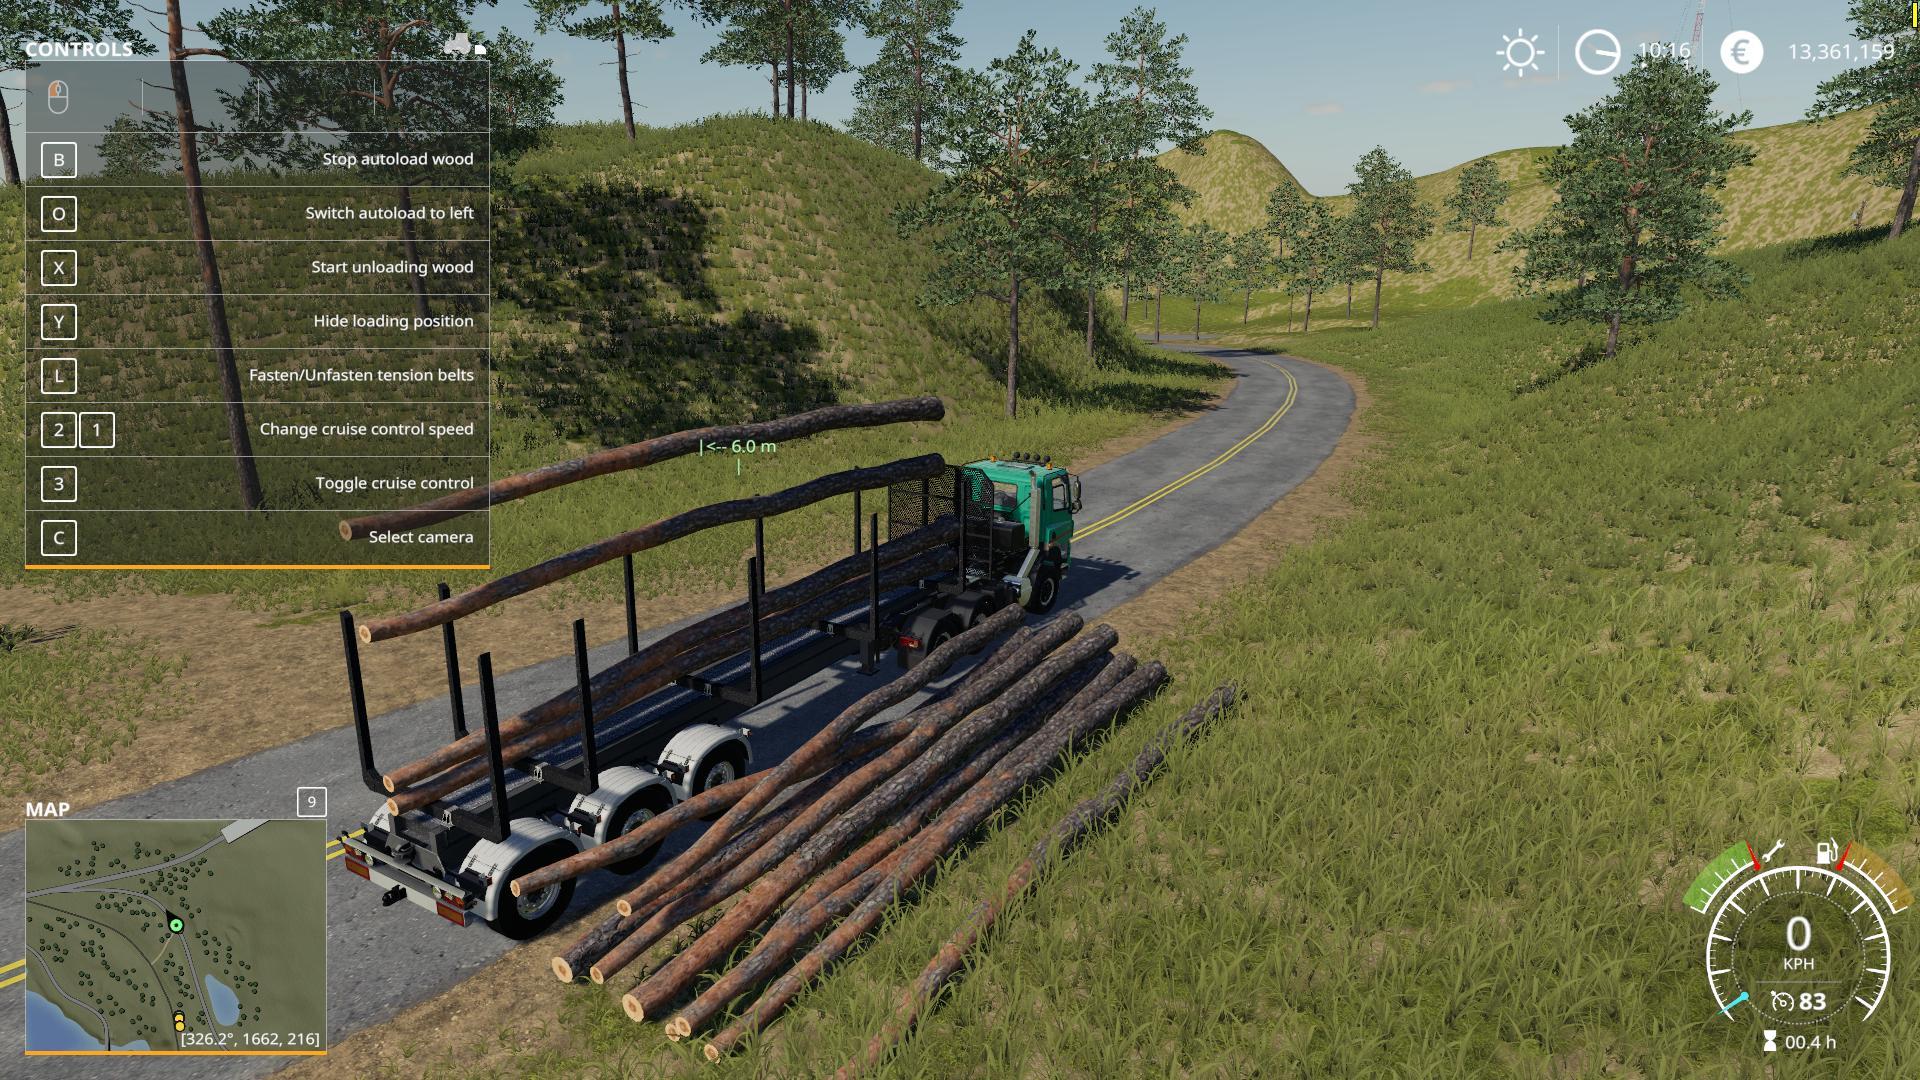 Timber Runner Wide Autoload Wood v1.0 FS19 | Farming Simulator 19 Mod | FS19 mod